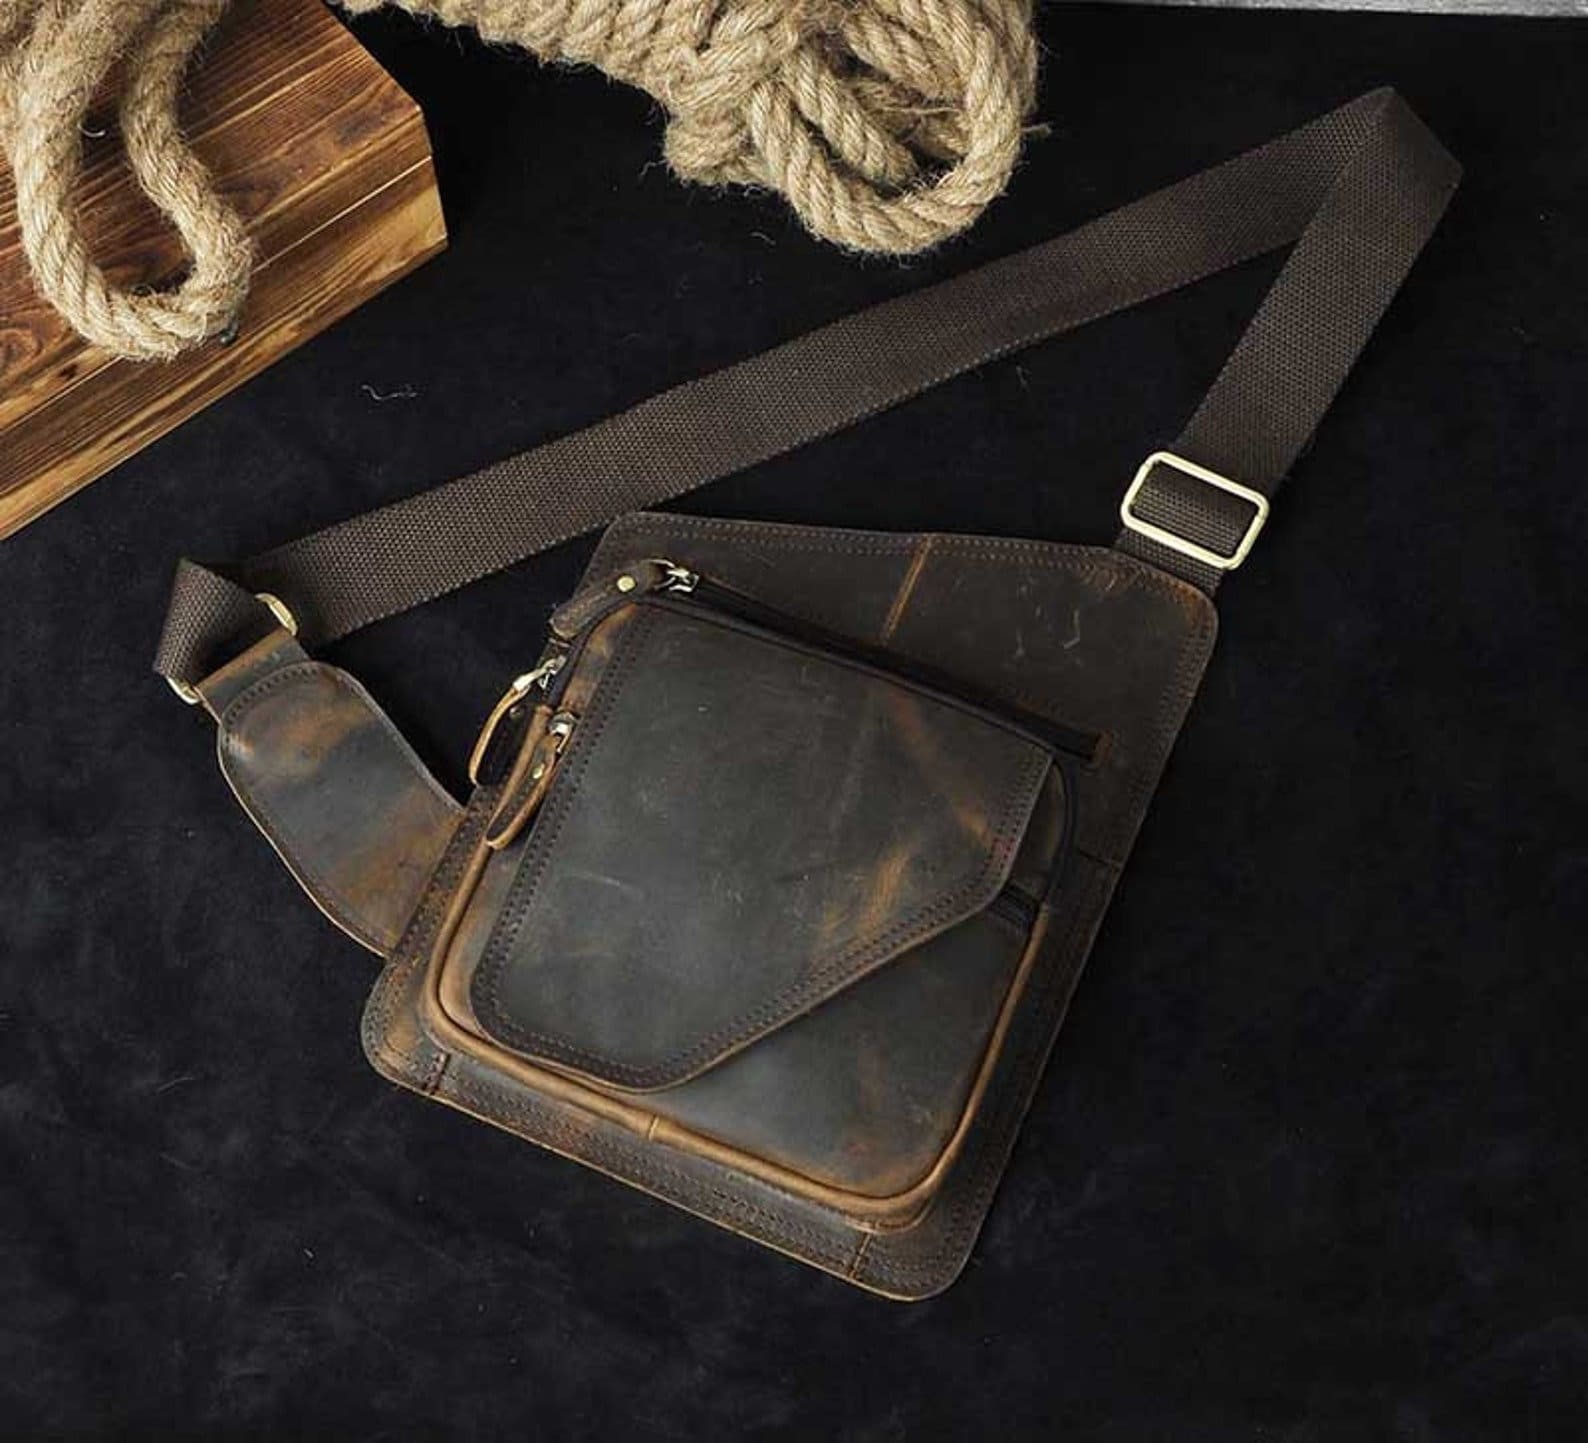 Kattee Unisex Crazy Horse Leather Small Messenger Shoulder Bag Dark Brown 